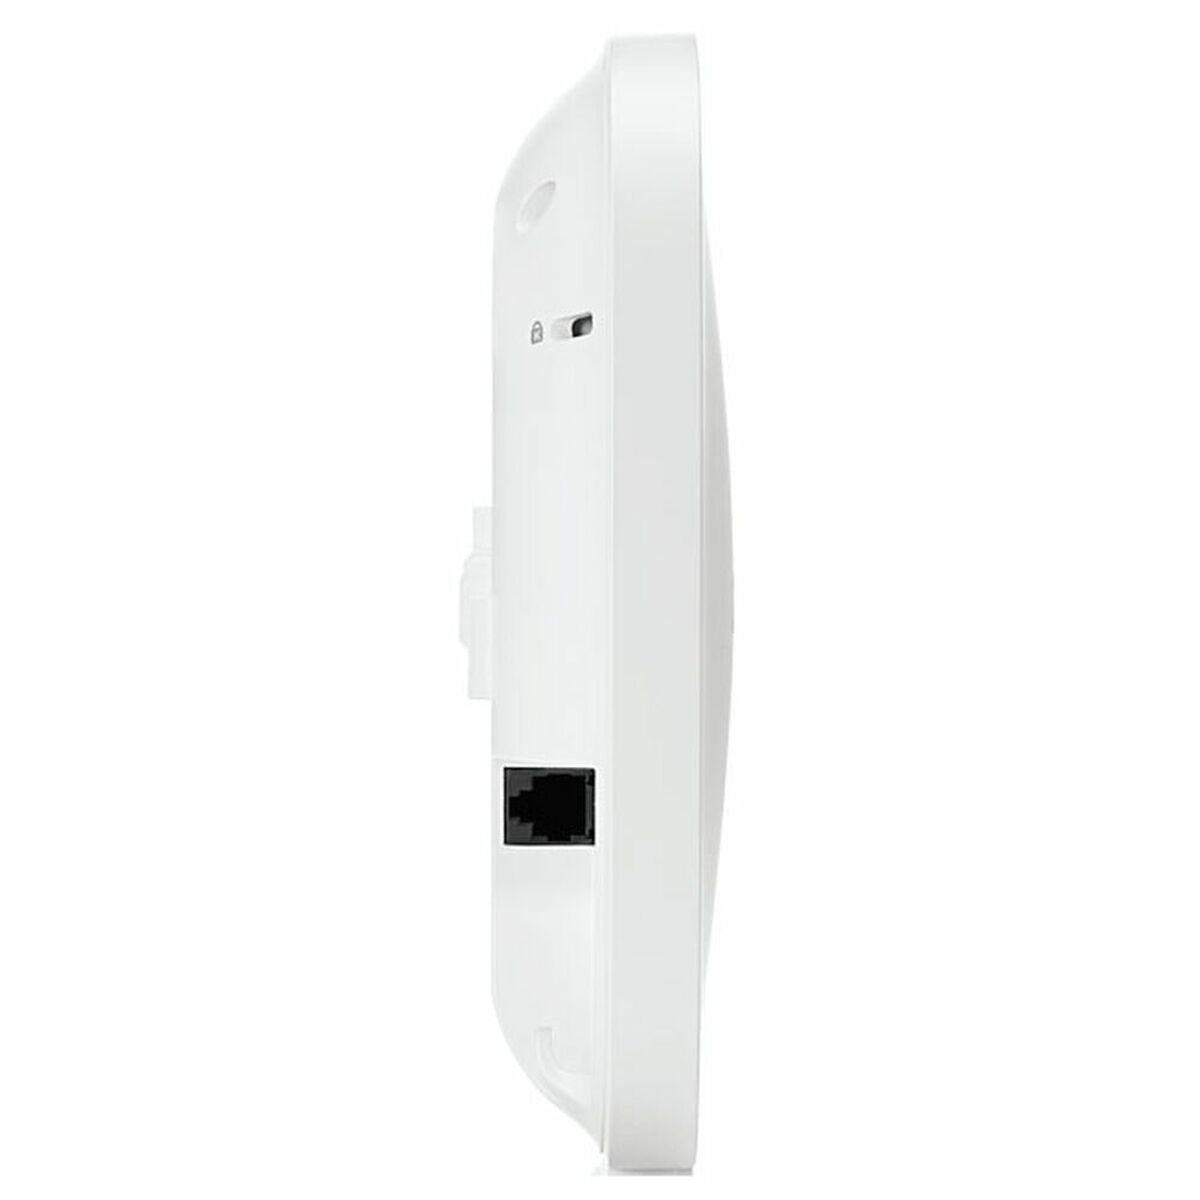 Access point HPE R4W02A               White